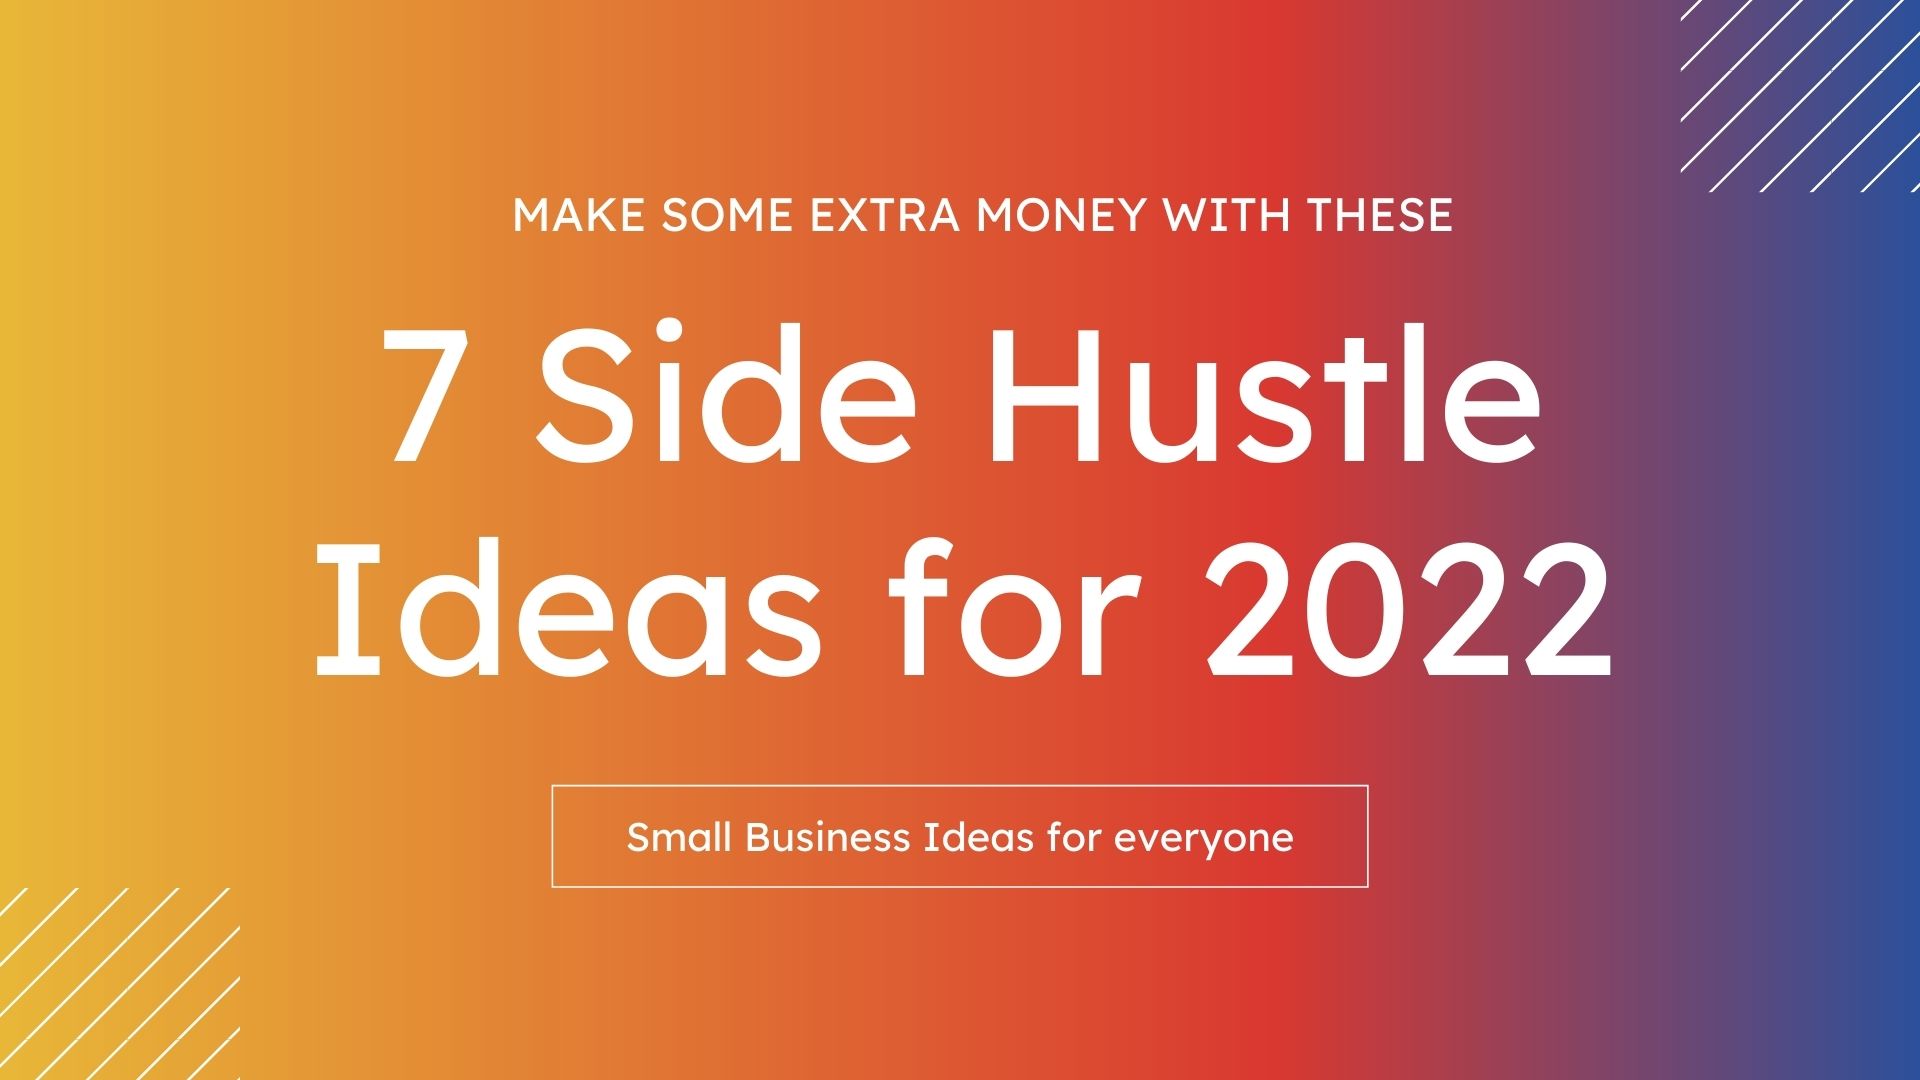 7 Side Hustle Ideas for 2022